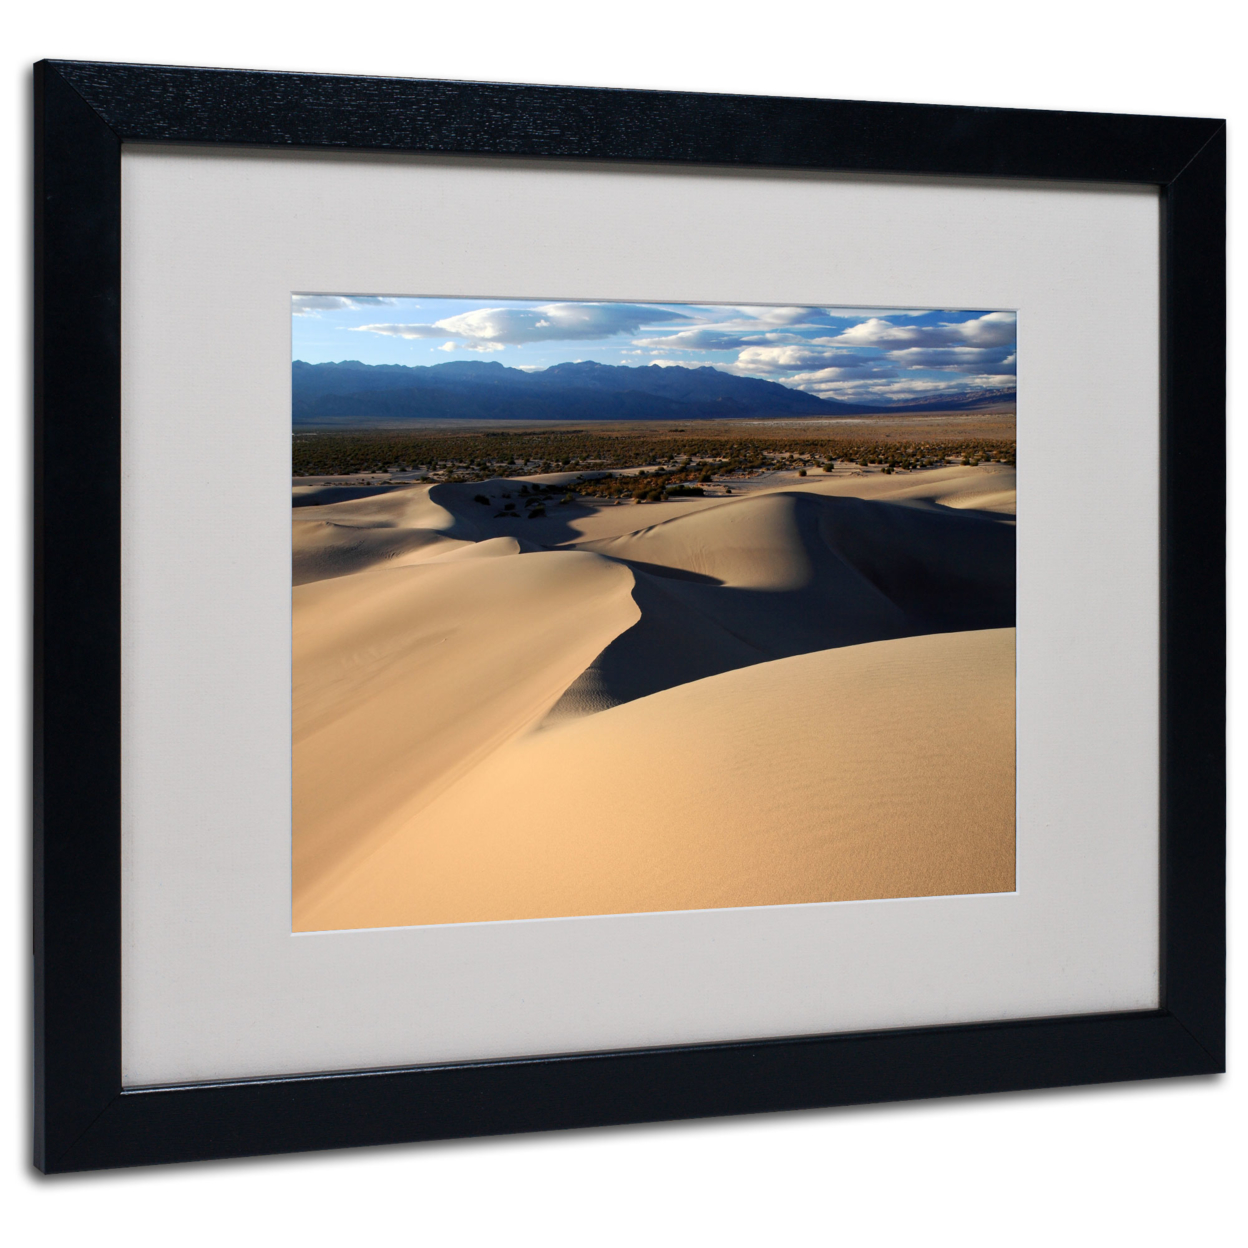 Pierre Leclerc 'Sand Dunes' Black Wooden Framed Art 18 X 22 Inches